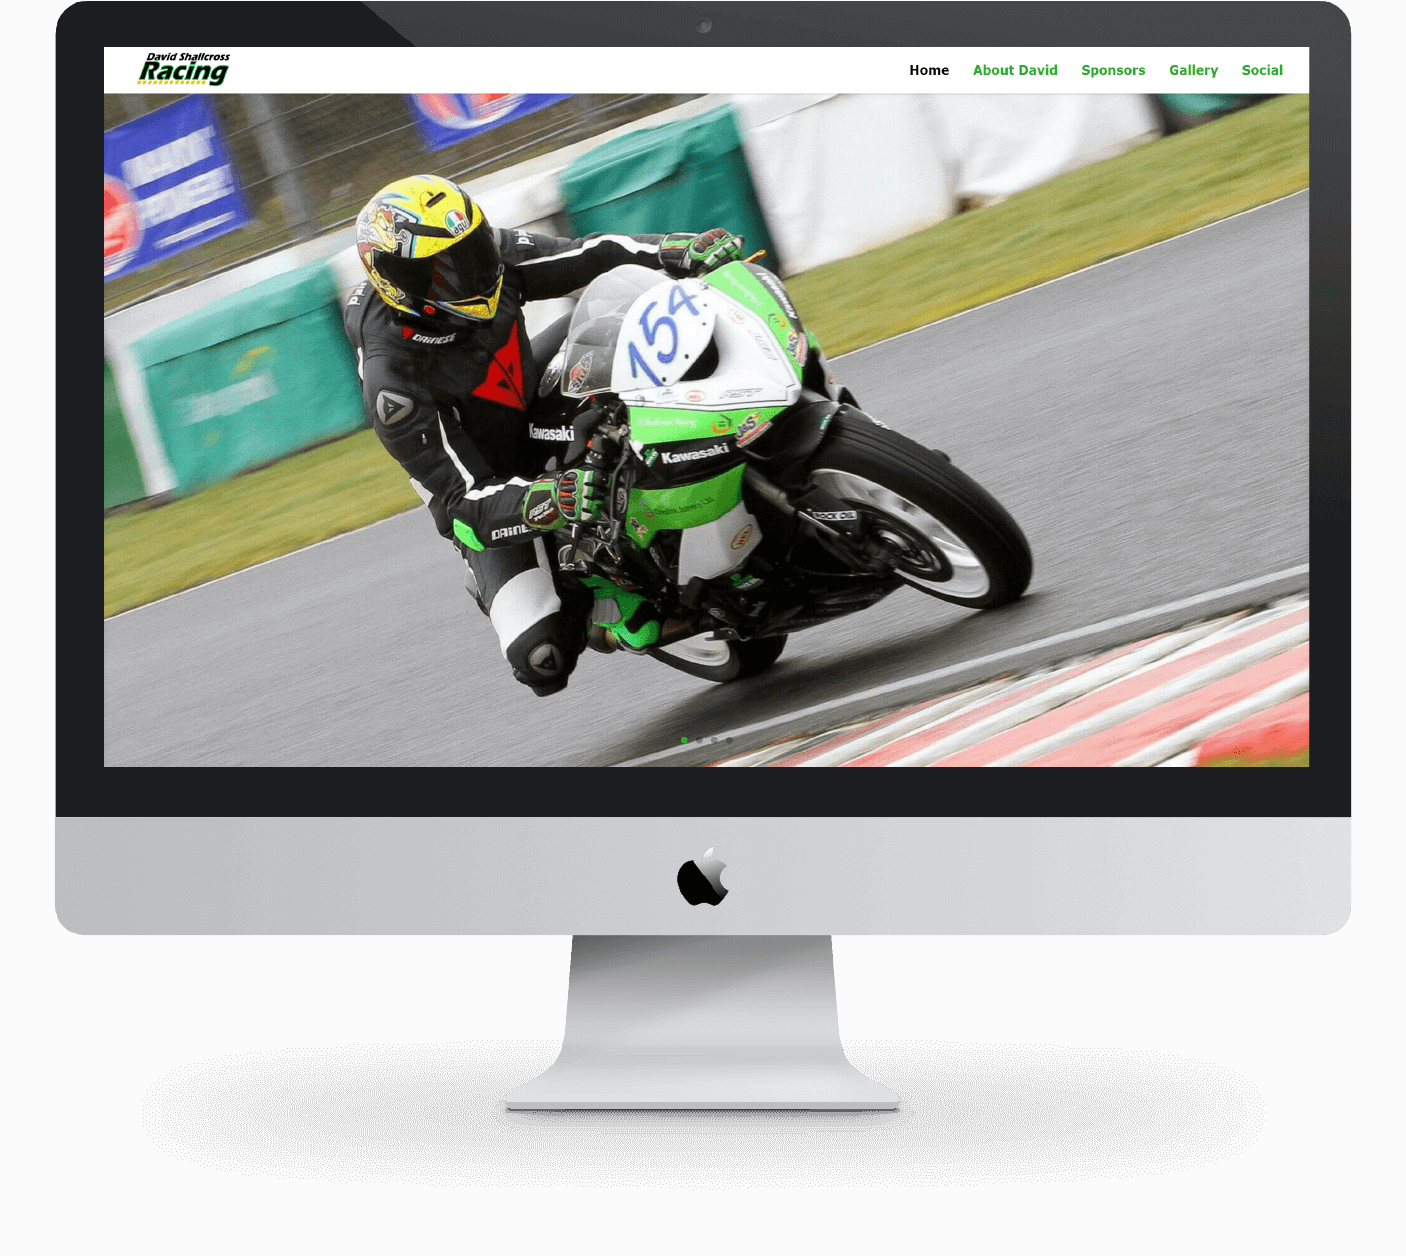 David Shallcross Racing by Cosmic Web Design in Stockport